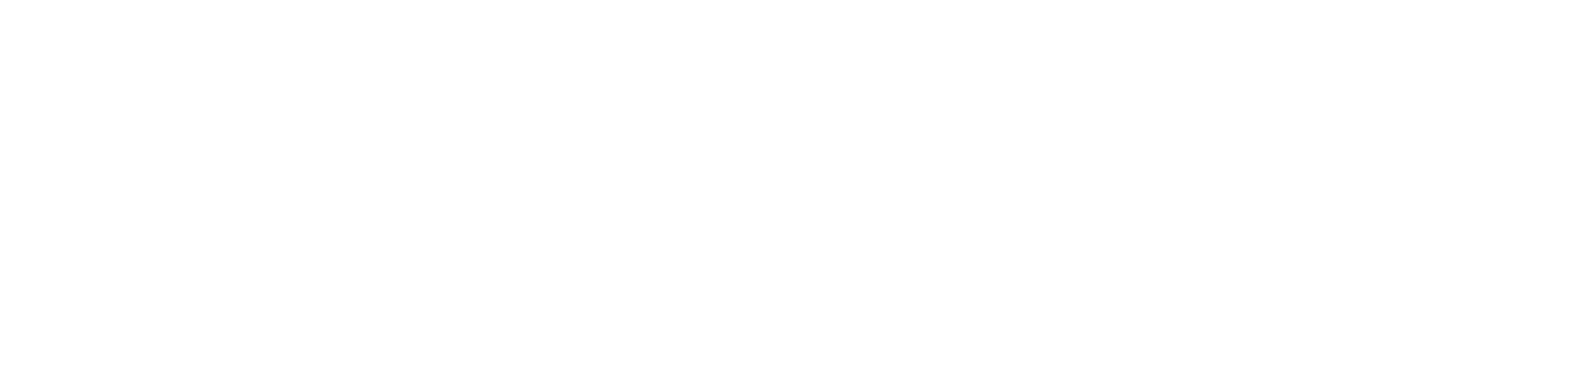 Quotient logo large for dark backgrounds (transparent PNG)